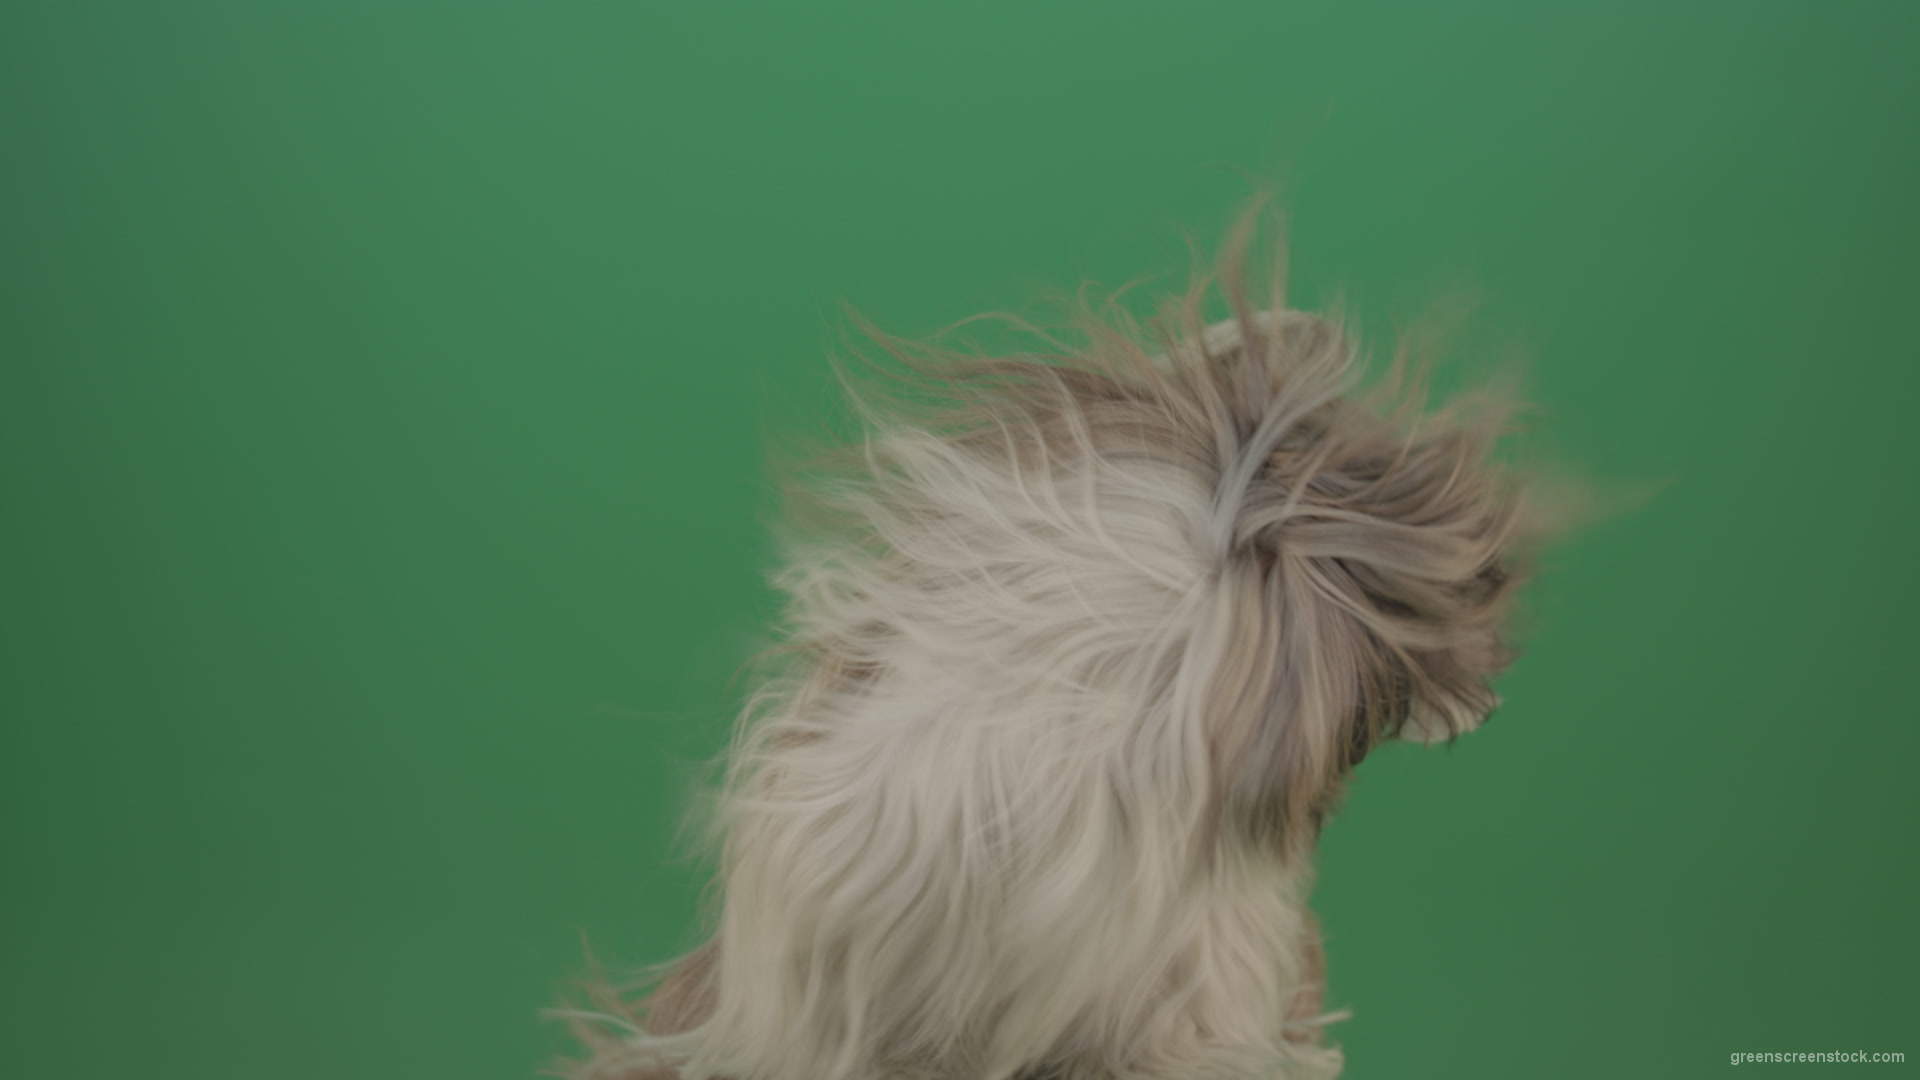 Fashion-long-hair-Shihtzu-dog-in-wind-turbulence-hairstyle-isolated-on-green-screen_007 Green Screen Stock